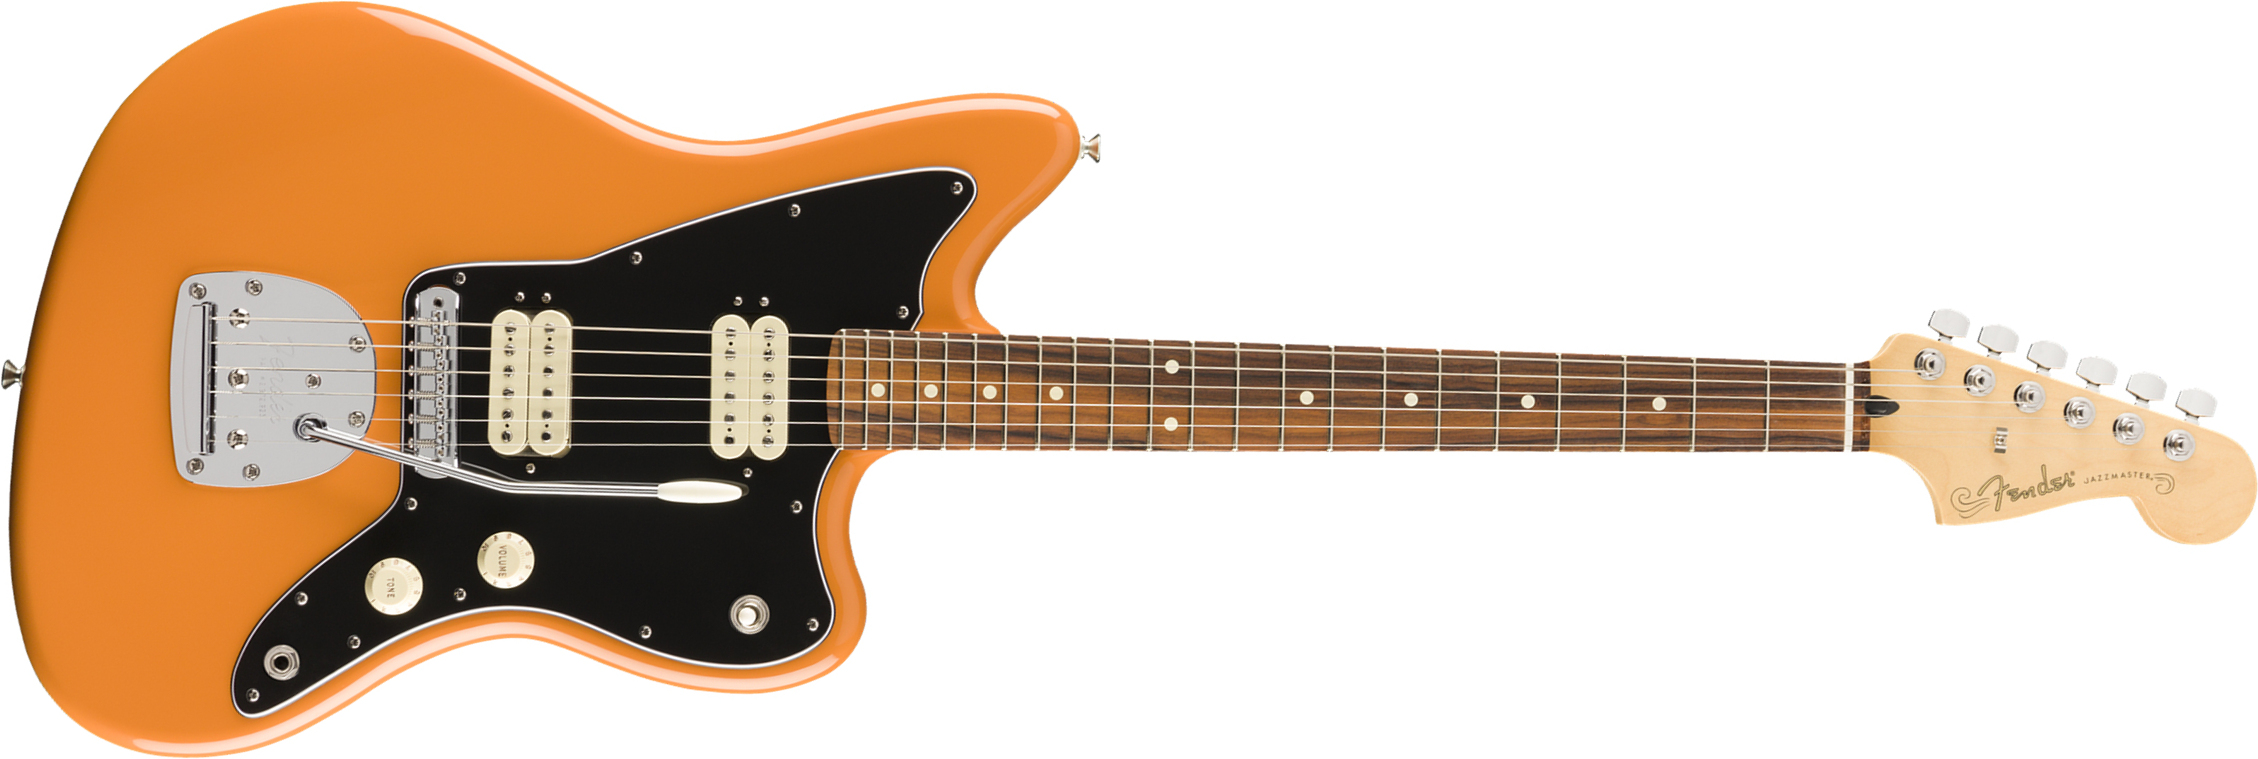 Fender Jazzmaster Player Mex Hh Pf - Capri Orange - Retro rock electric guitar - Main picture